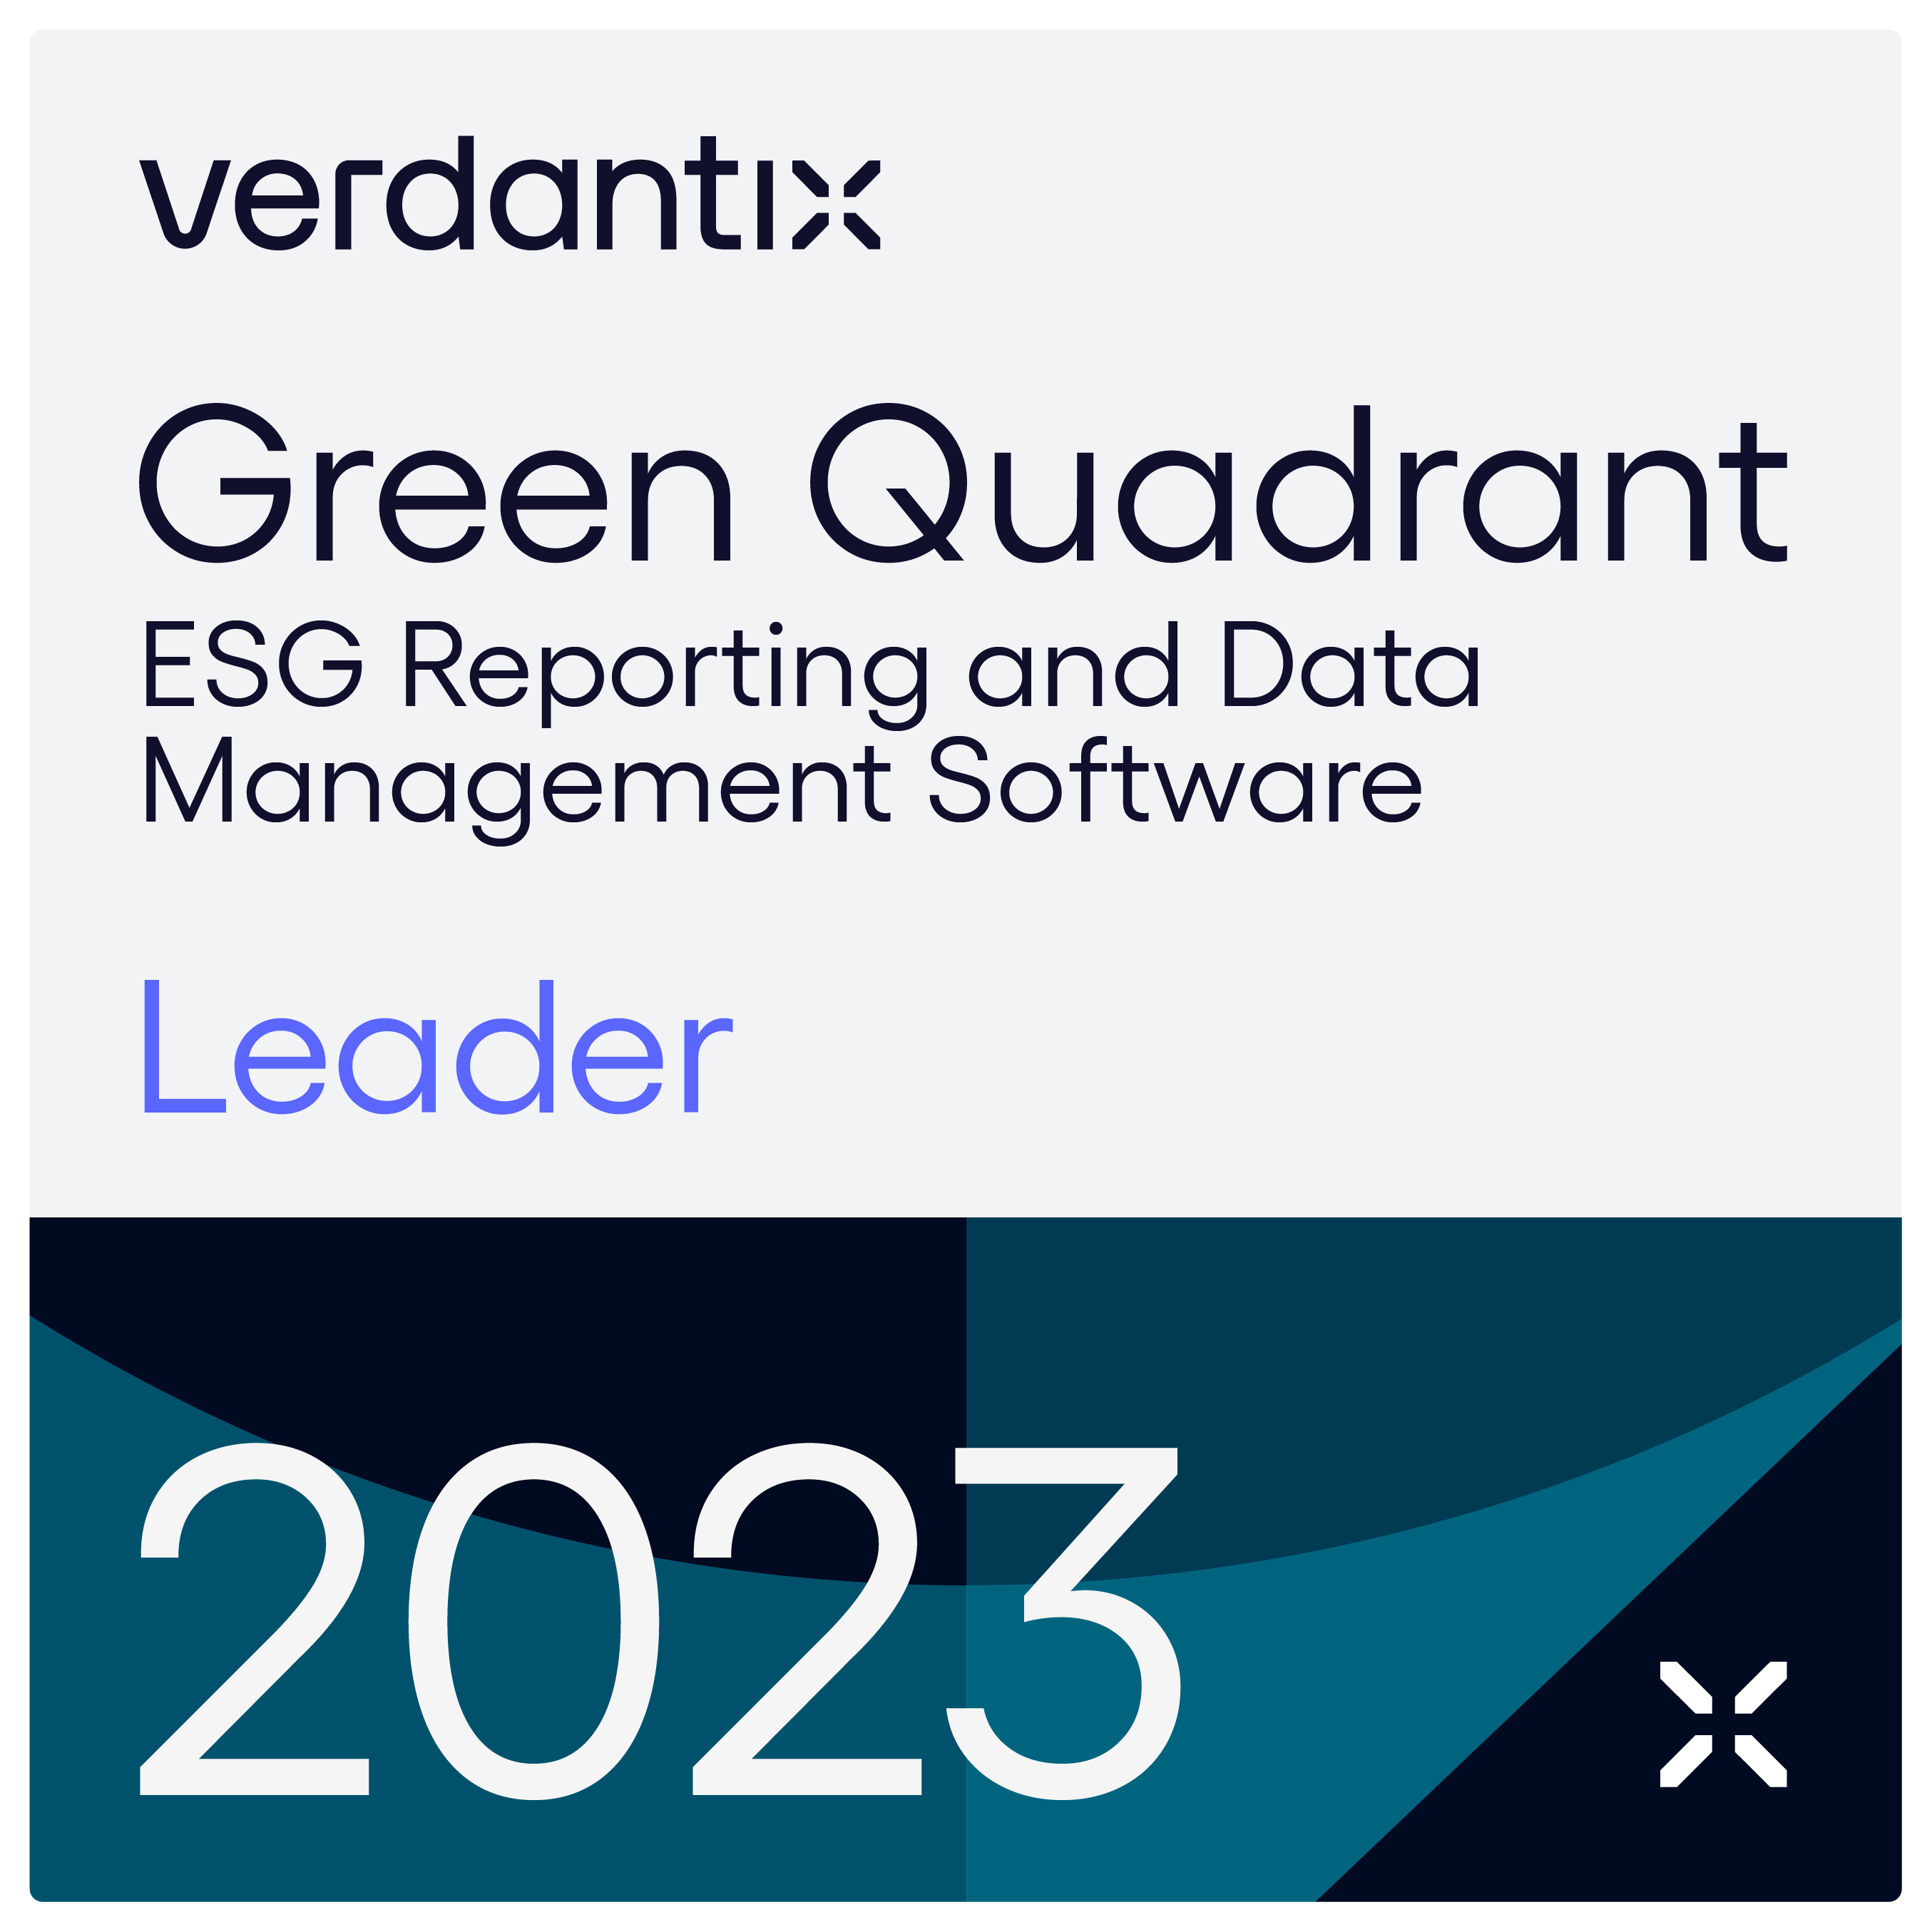 Verdantix Green Quadrant badge for web page 2023